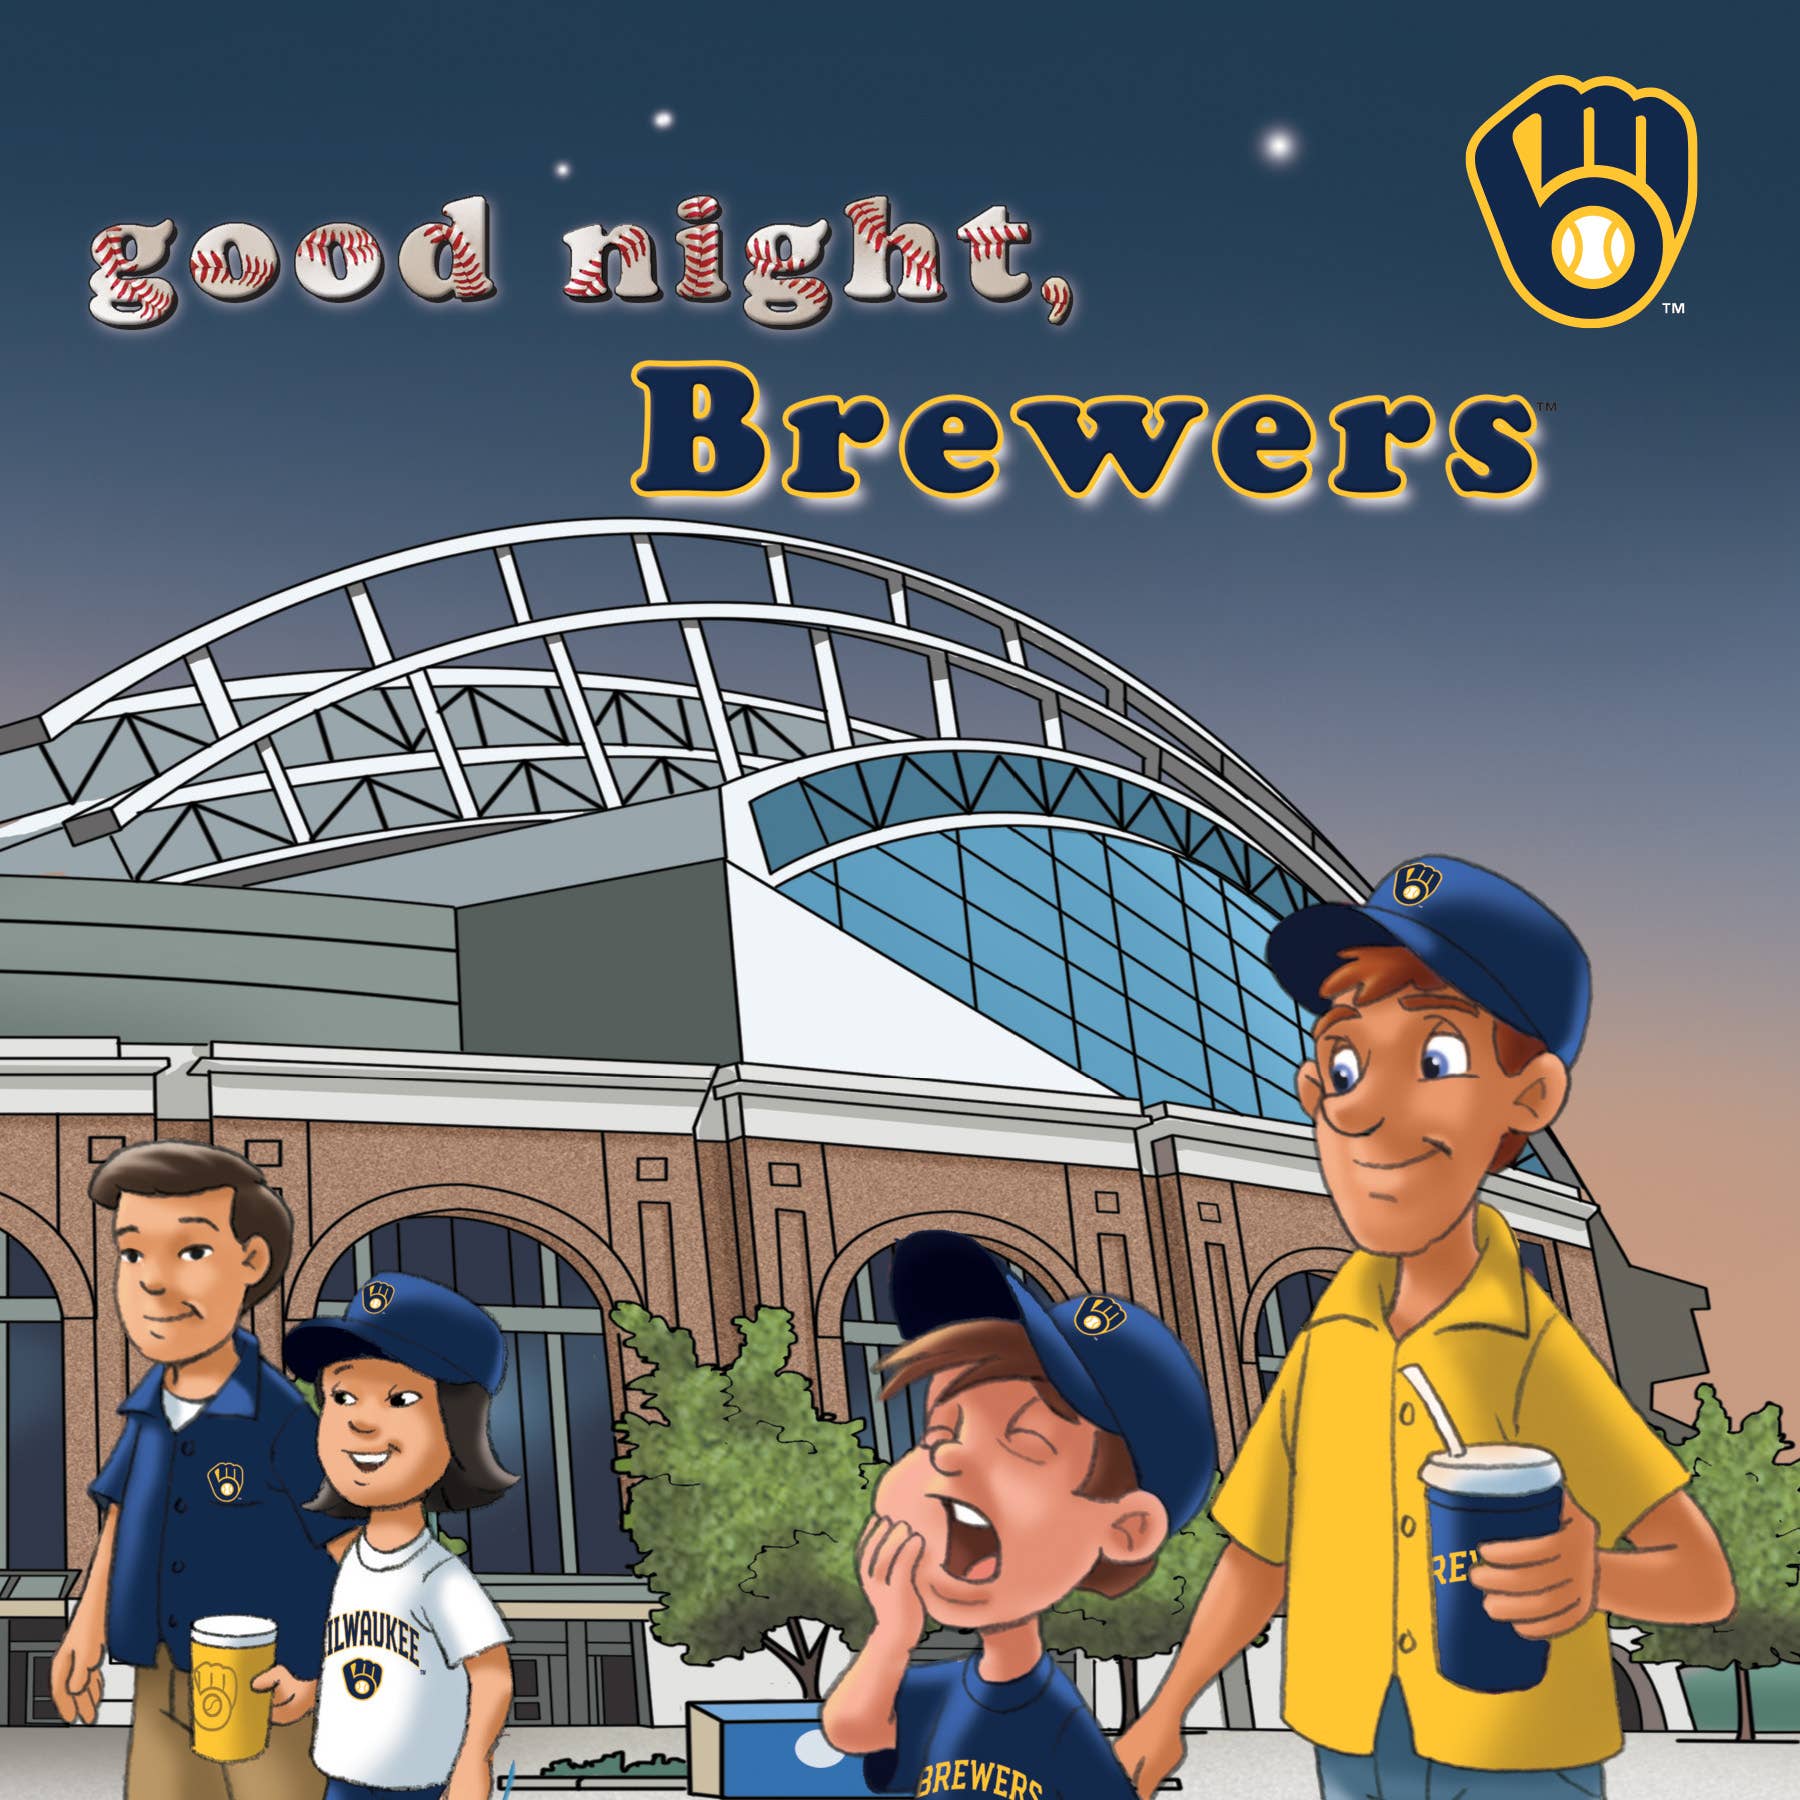 Children's Milwaukee Brewers ABC Book